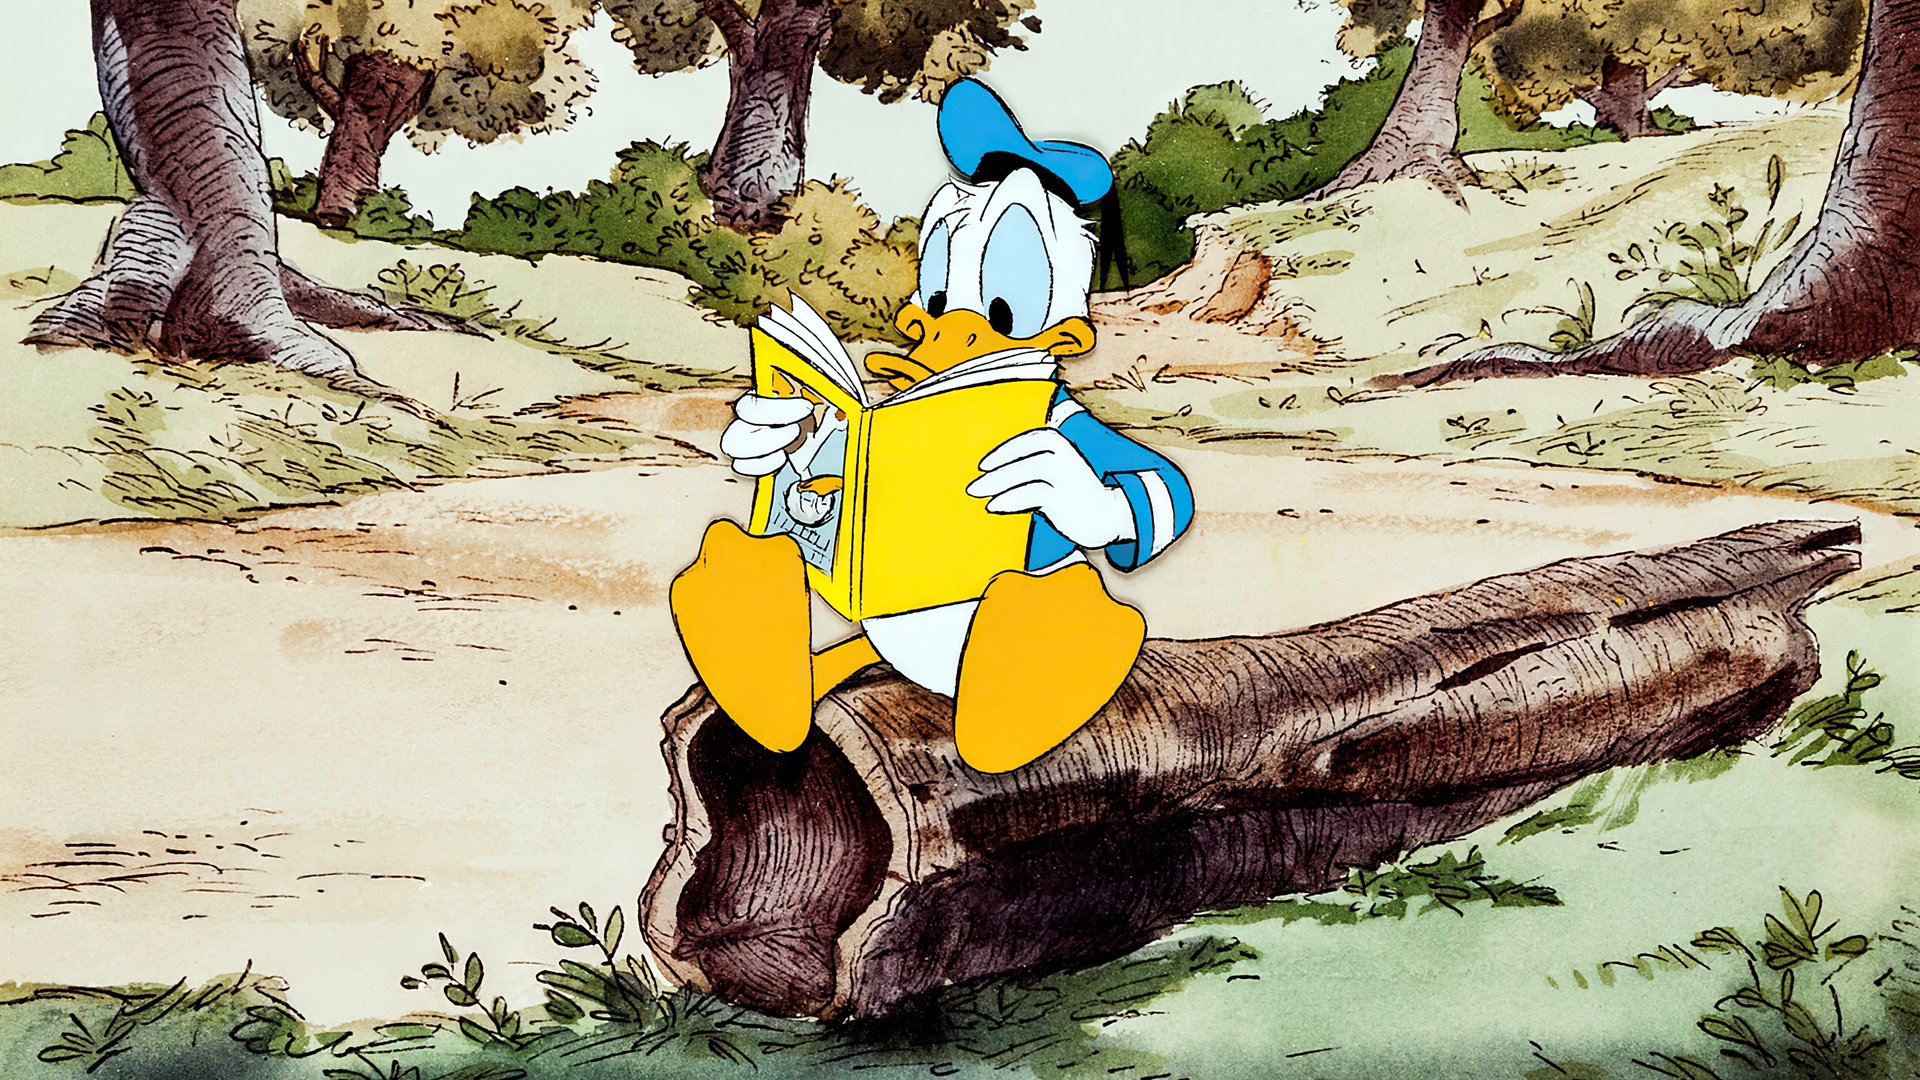 General 1920x1080 Walt Disney Disney animation cartoon production cel Donald Duck books log forest trees sitting